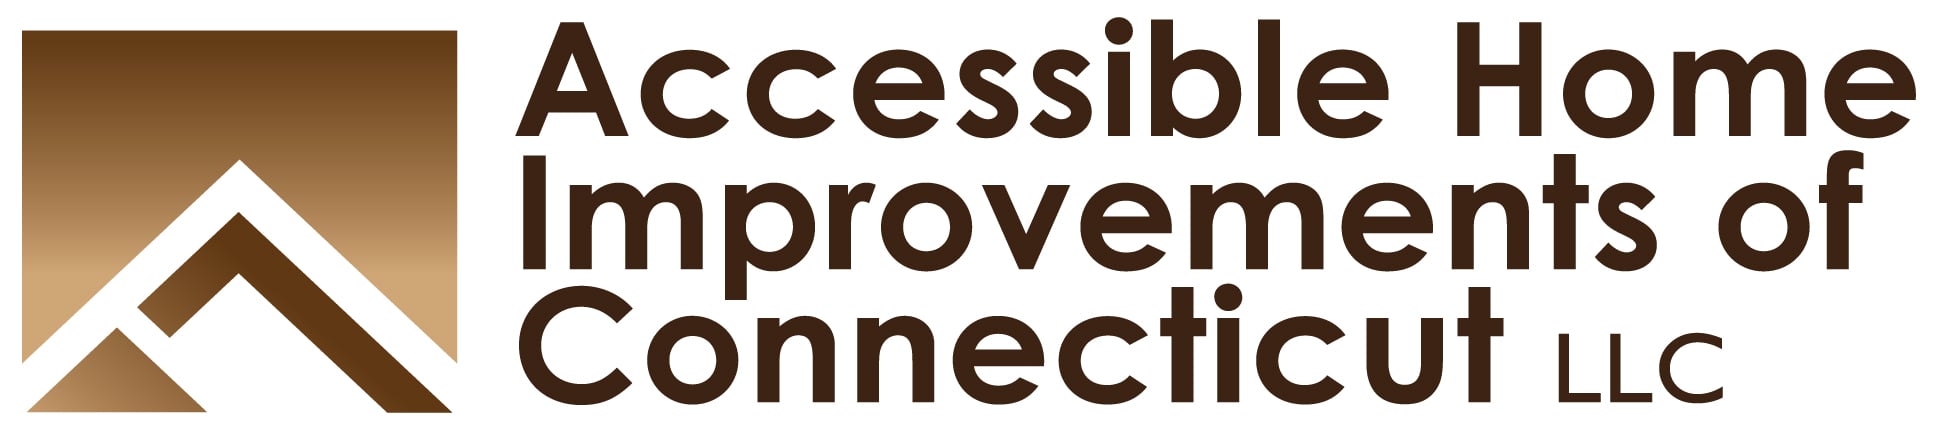 Accessible Home Improvements of Connecticut, LLC Logo